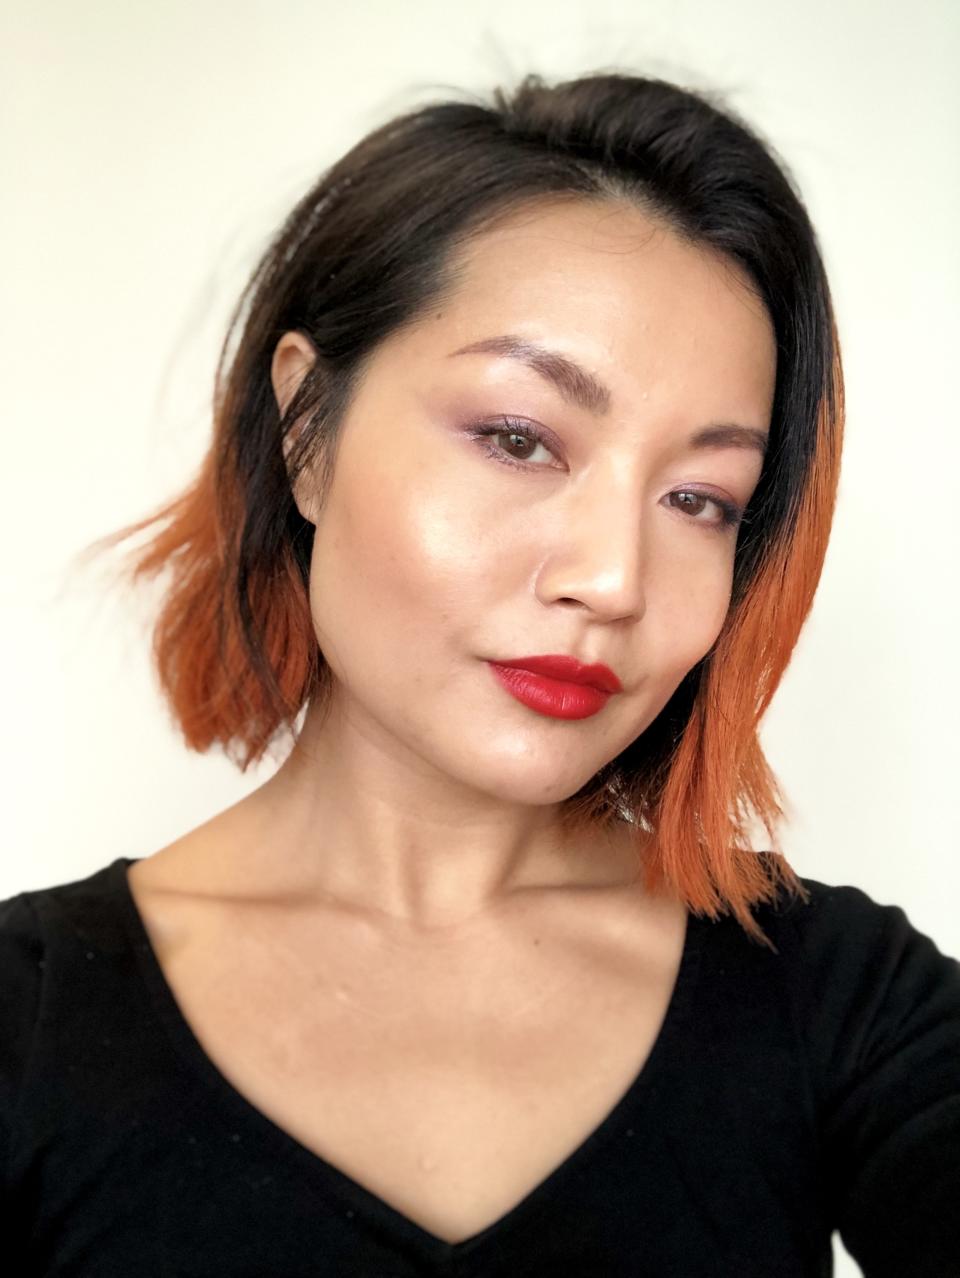 Allure digital makeup editor Sable Yong wears Park Avenue, a vibrant scarlet